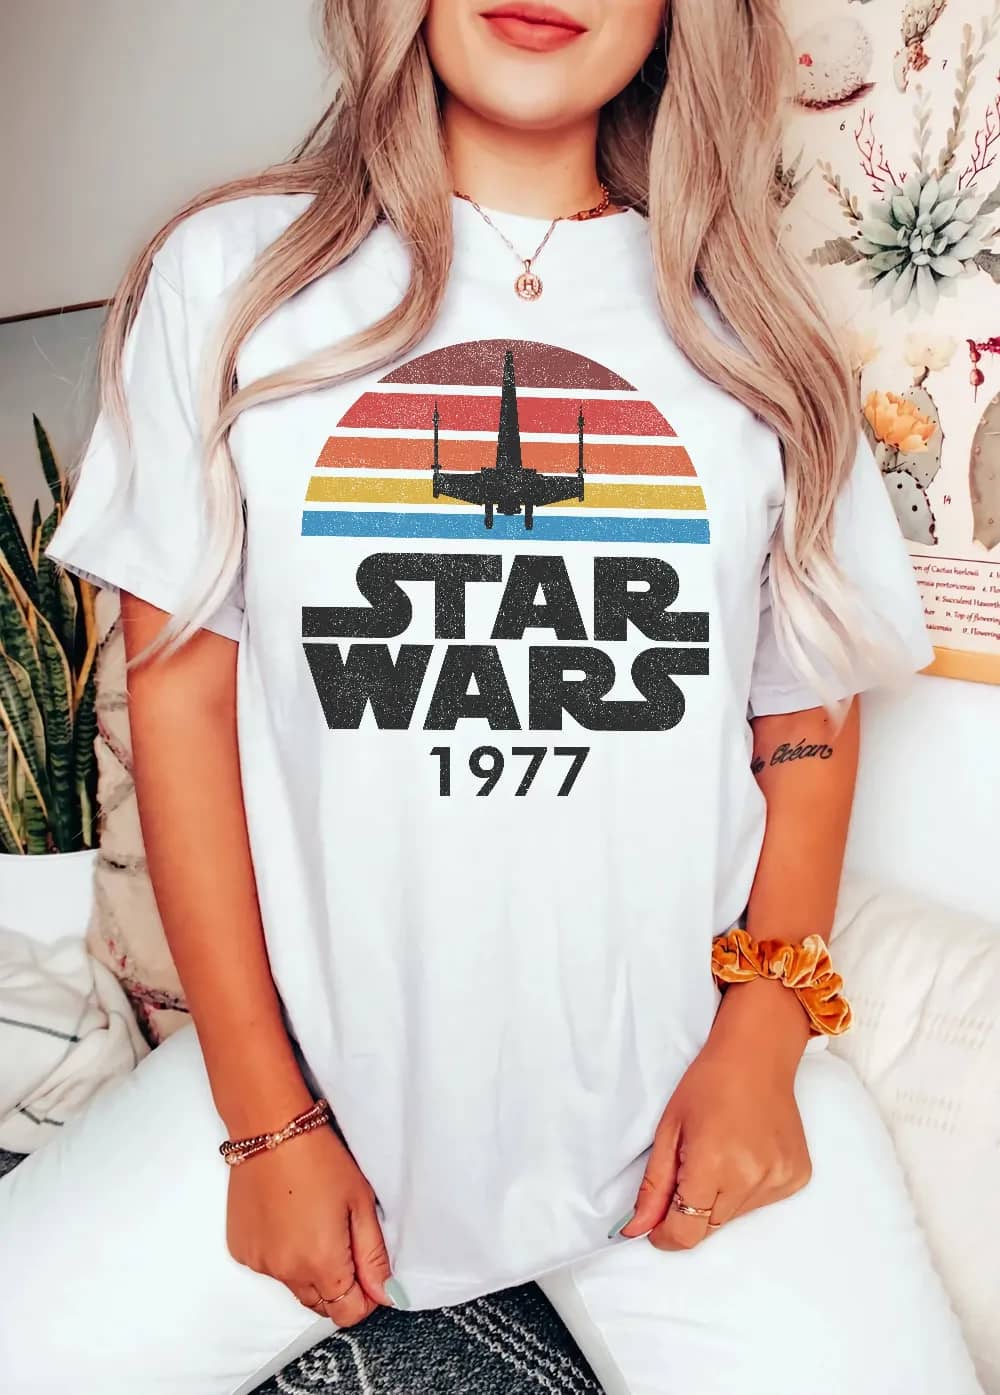 Inktee Store - Retro Star Wars 1977 Comfort Colors Shirt - Vintage Star Wars 1977 Shirt - Disney Star Wars Shirt - Rainbow Stripe Shirt - Disneyworld Shirt Image